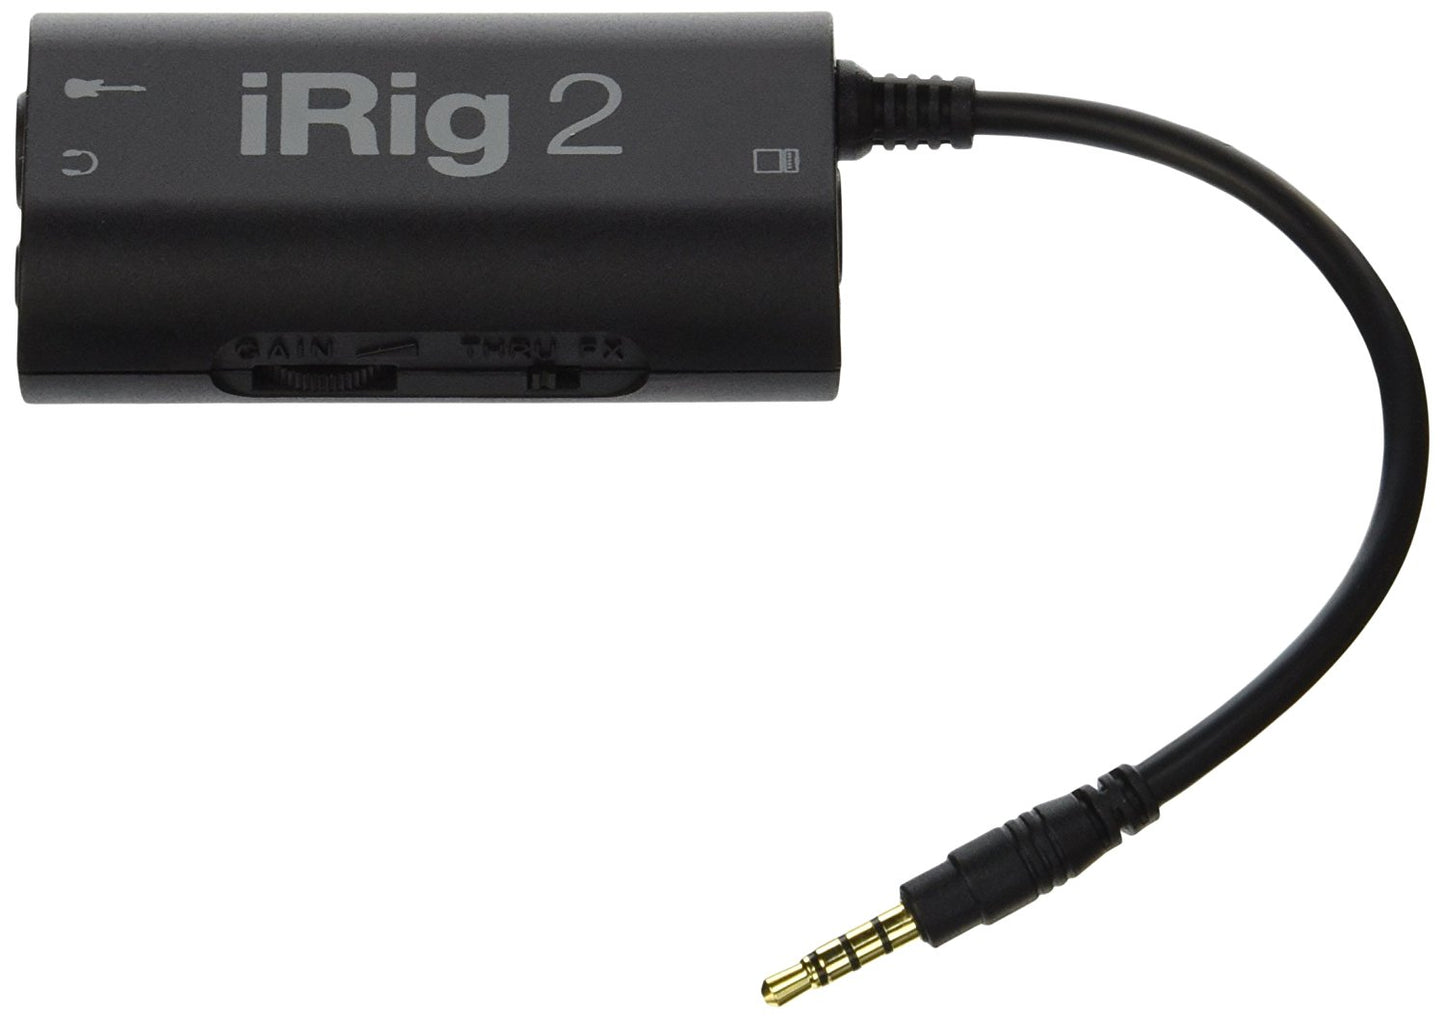 IK Multimedia iRig 2 guitar interface adaptor for iOS